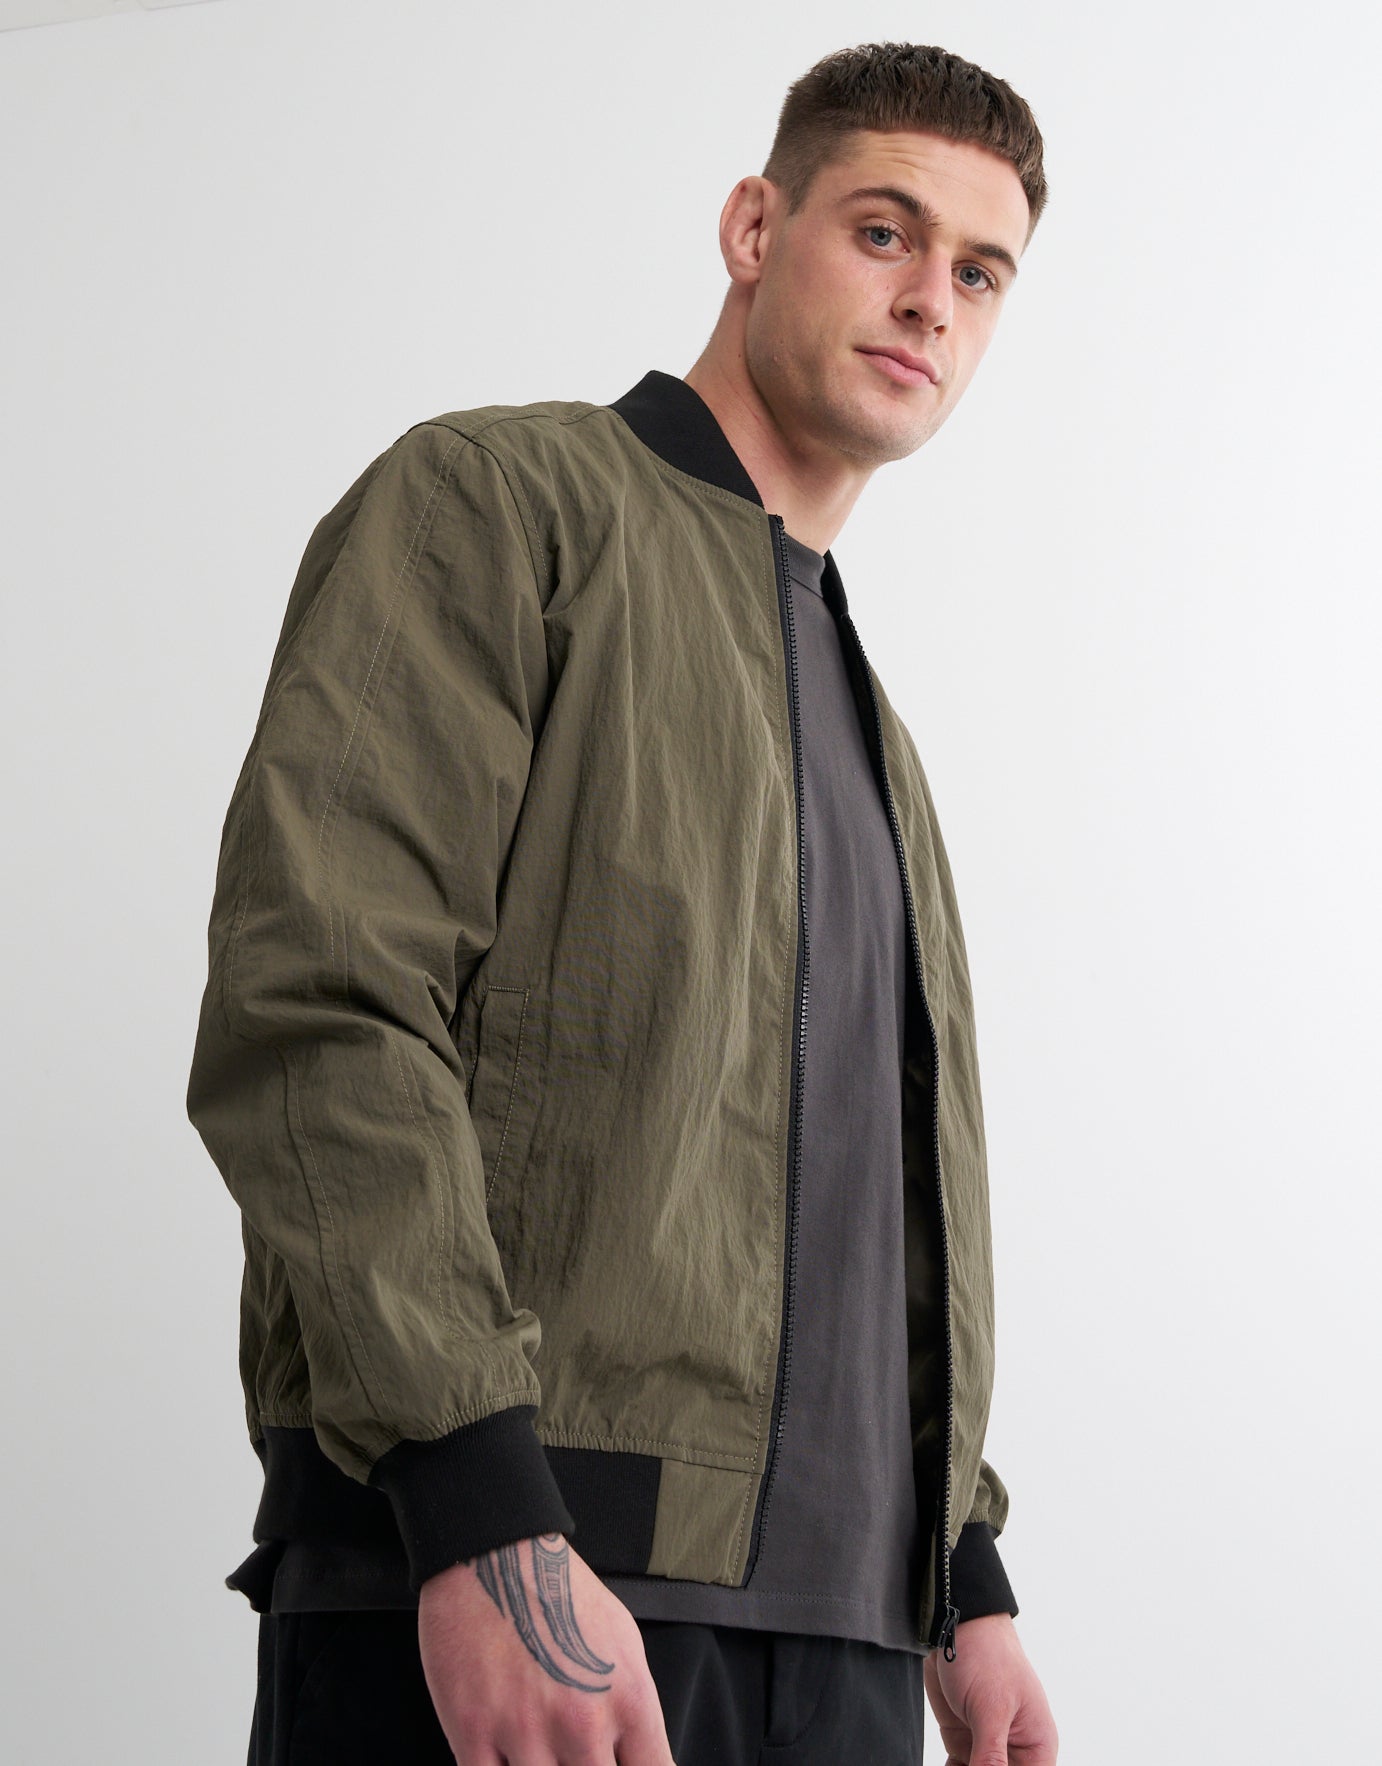 Green Bomber Jacket, Bomber Jacket Ideas With Black Leather Trouser | Men's  style, flight jacket, men's jackets